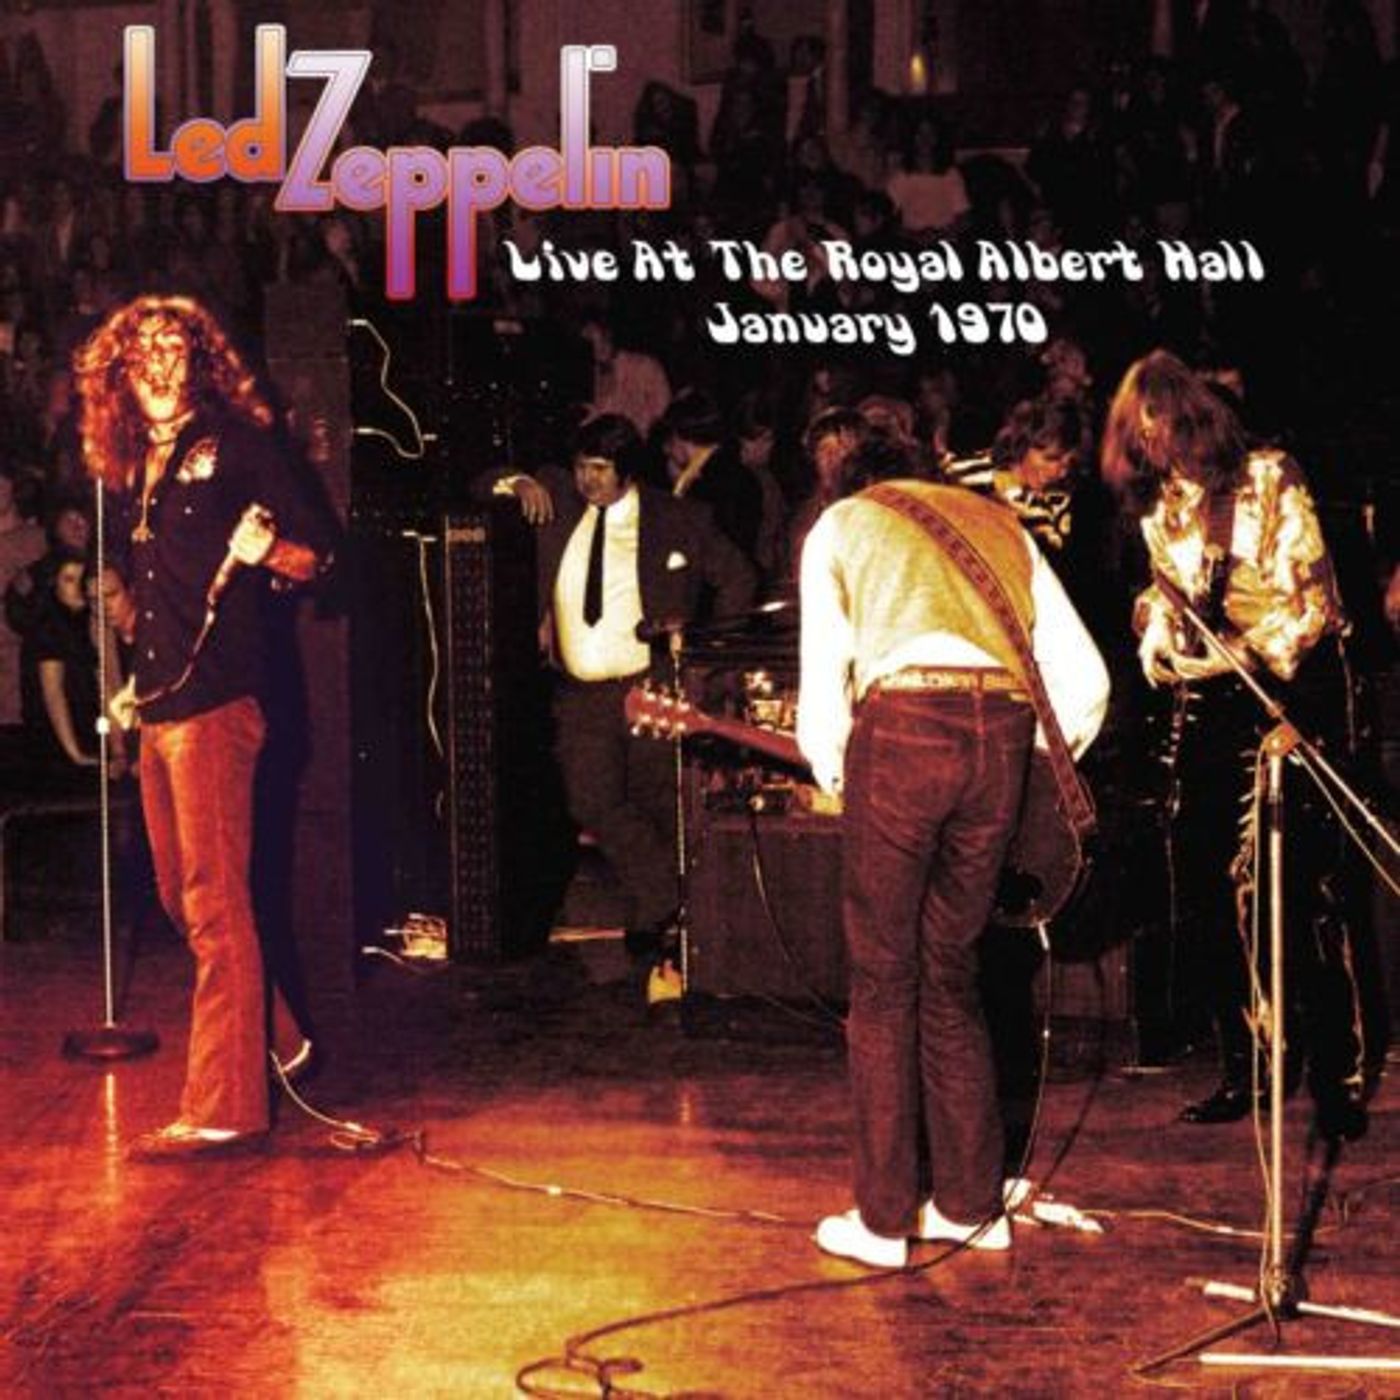 atualizando a minha playlist - ep 109 - Led Zeppelin – Live At The Royal Albert Hall January 1970